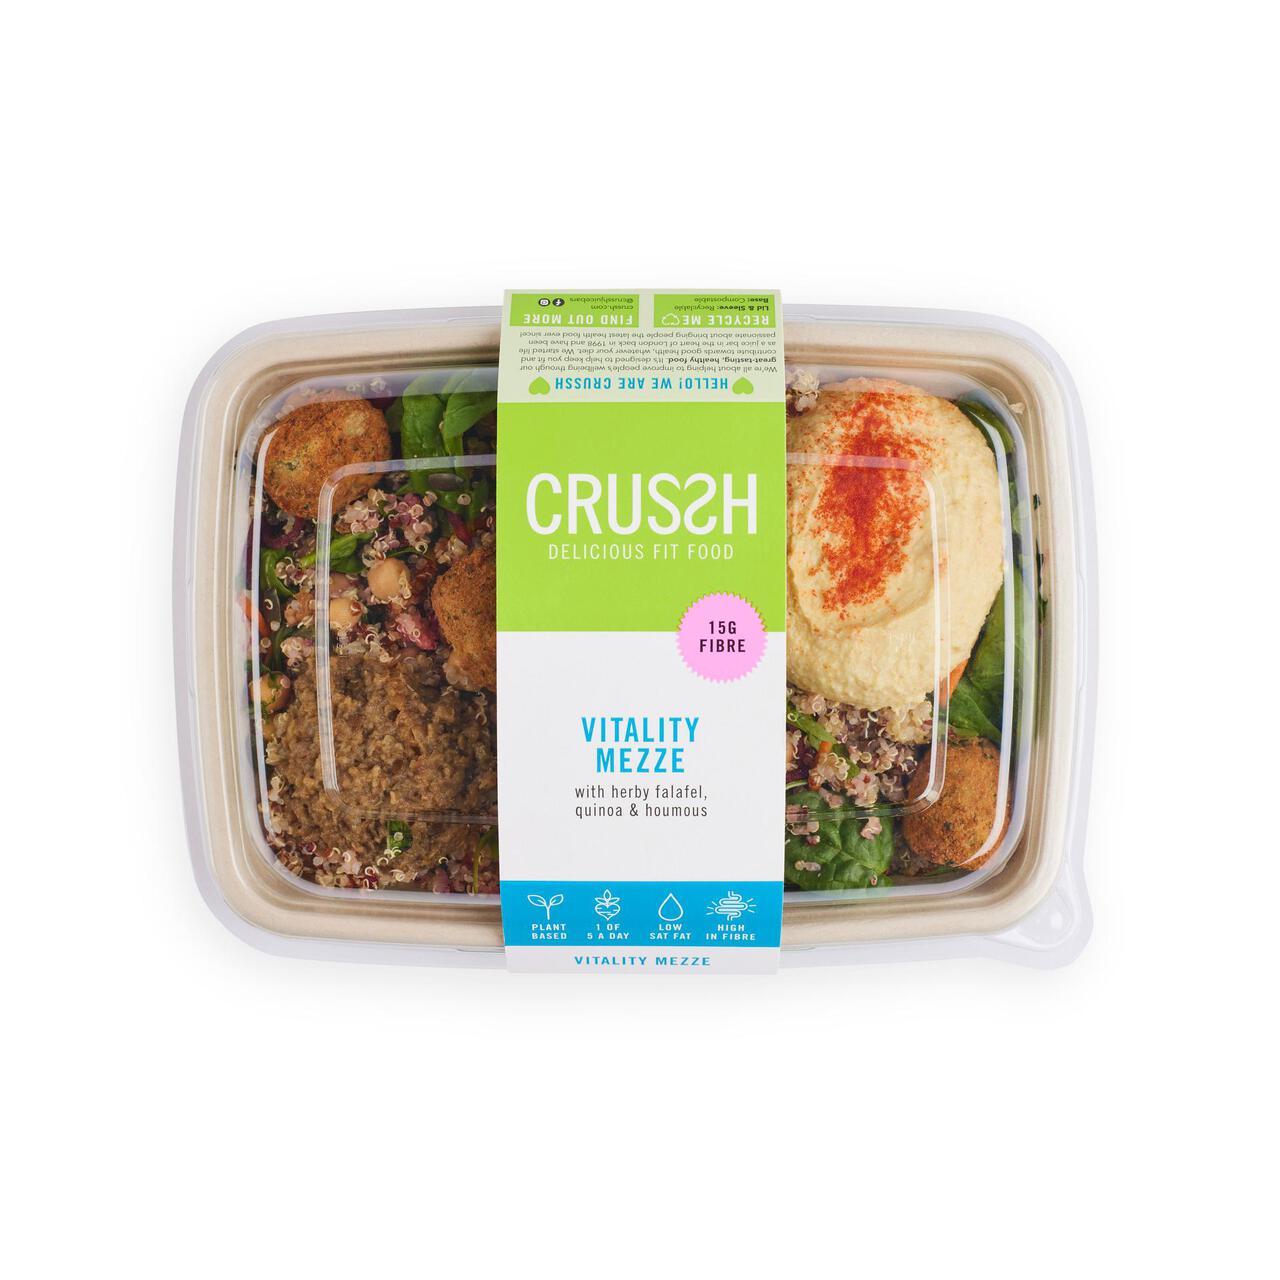 Crussh Vitality Mezze Salad Box 326g